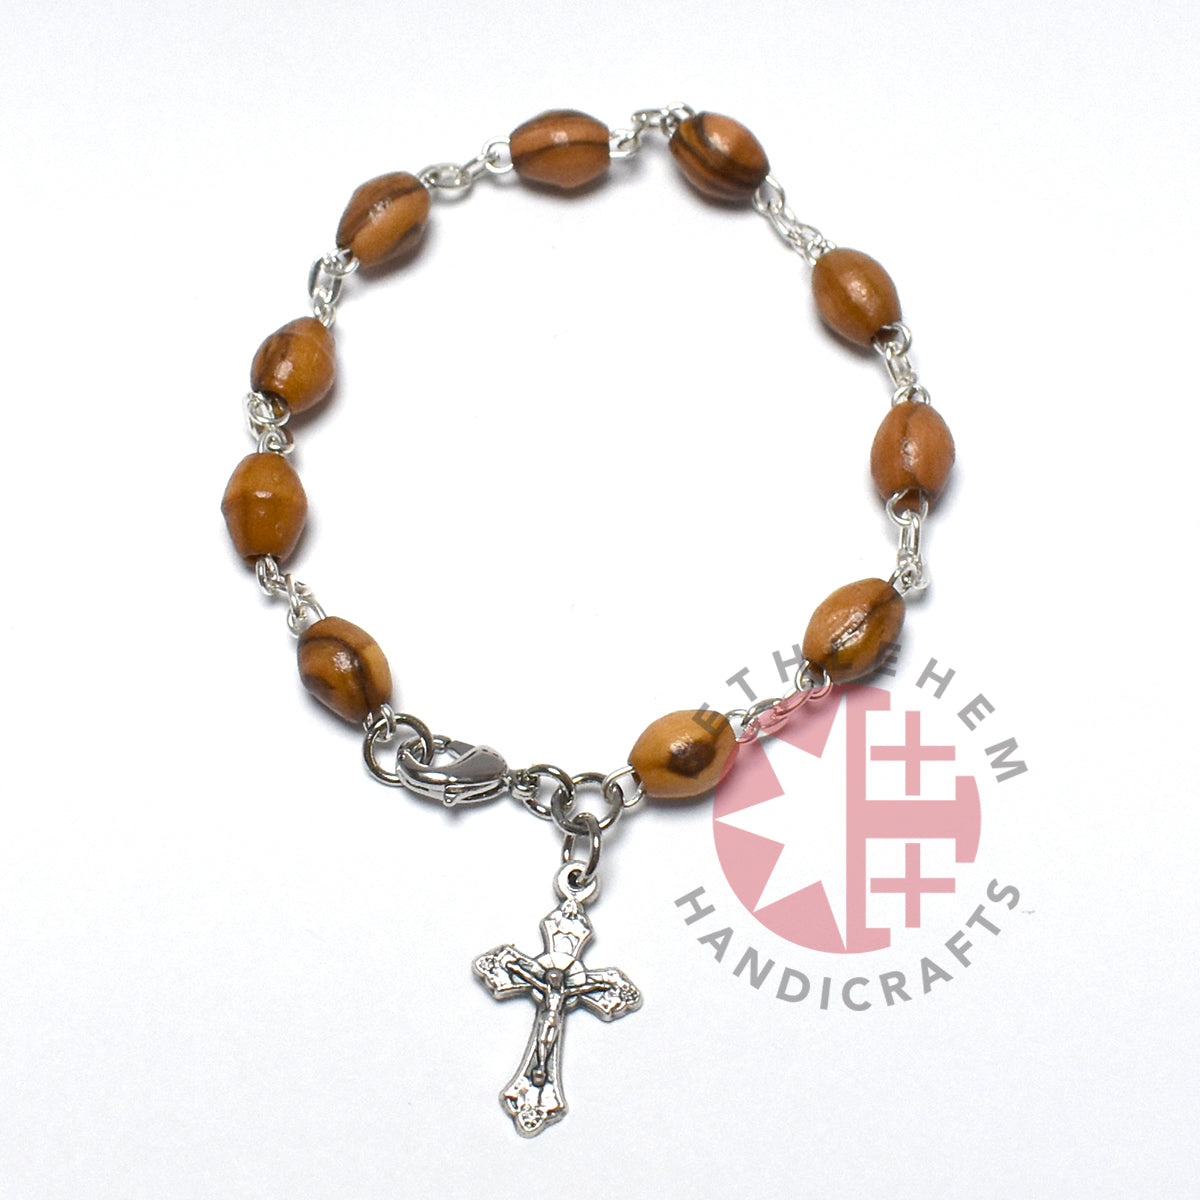 Rosary Bracelet with Budded Crucifix Pendant, Olive Wood 8*6 mm